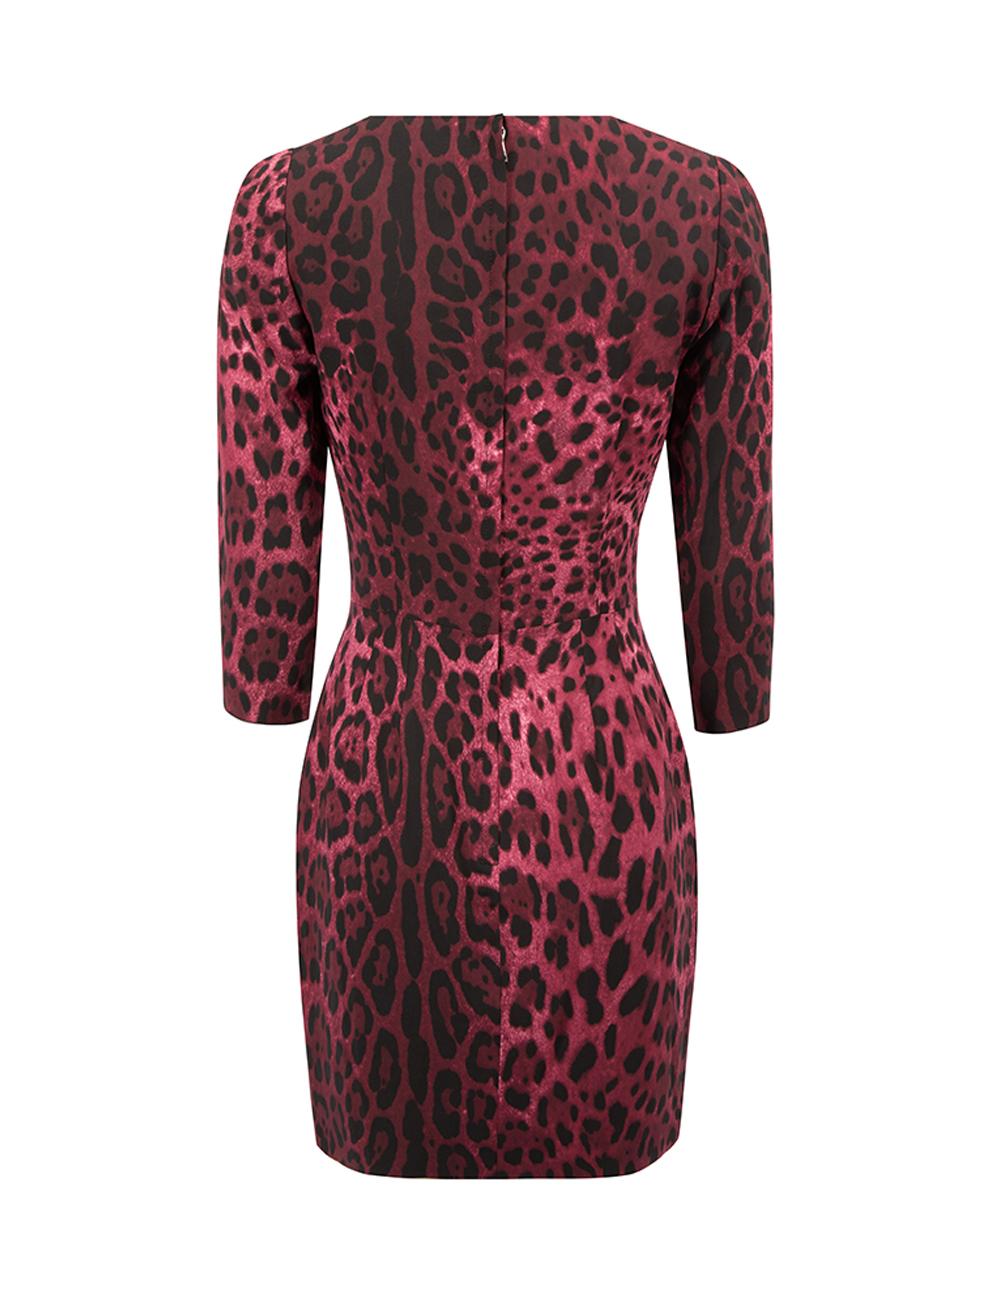 Dolce & Gabbana Women's Purple Leopard Print 3/4 Sleeve Dress In Excellent Condition In London, GB